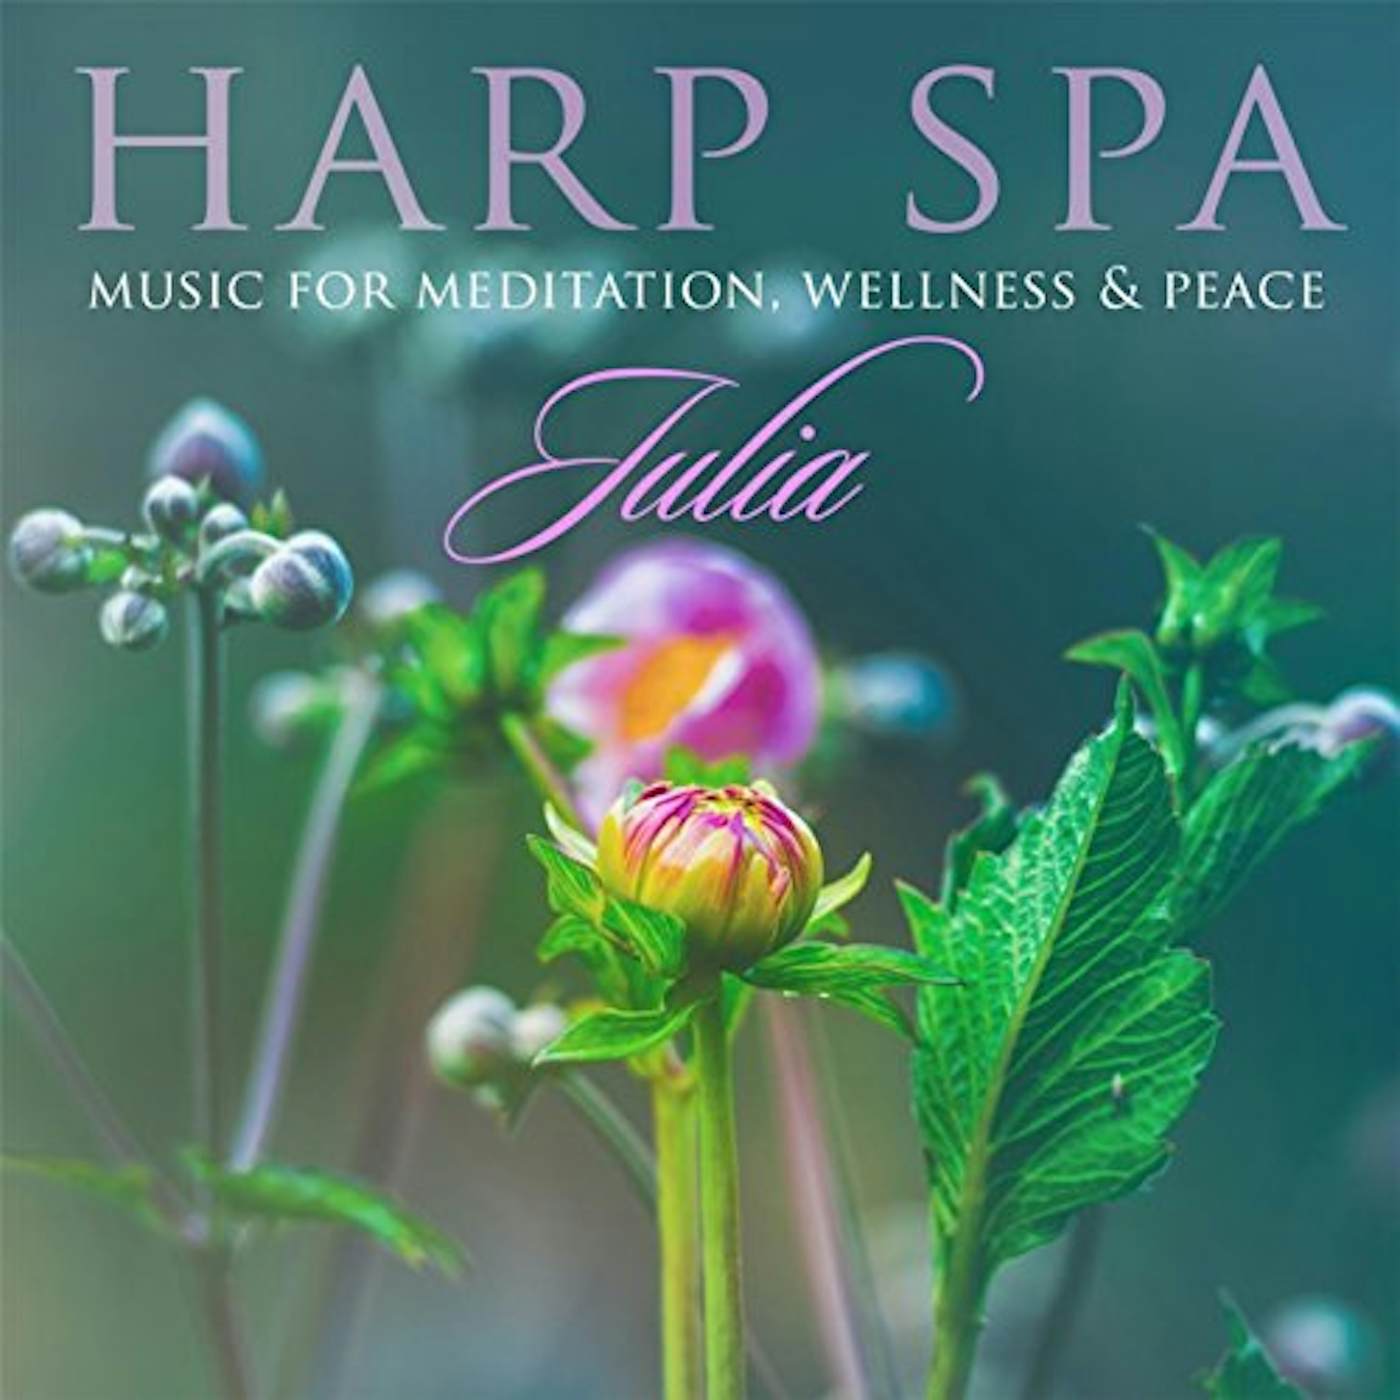 Julia HARP SPA: MUSIC FOR MEDITATION & WELLNESS & PEACE CD